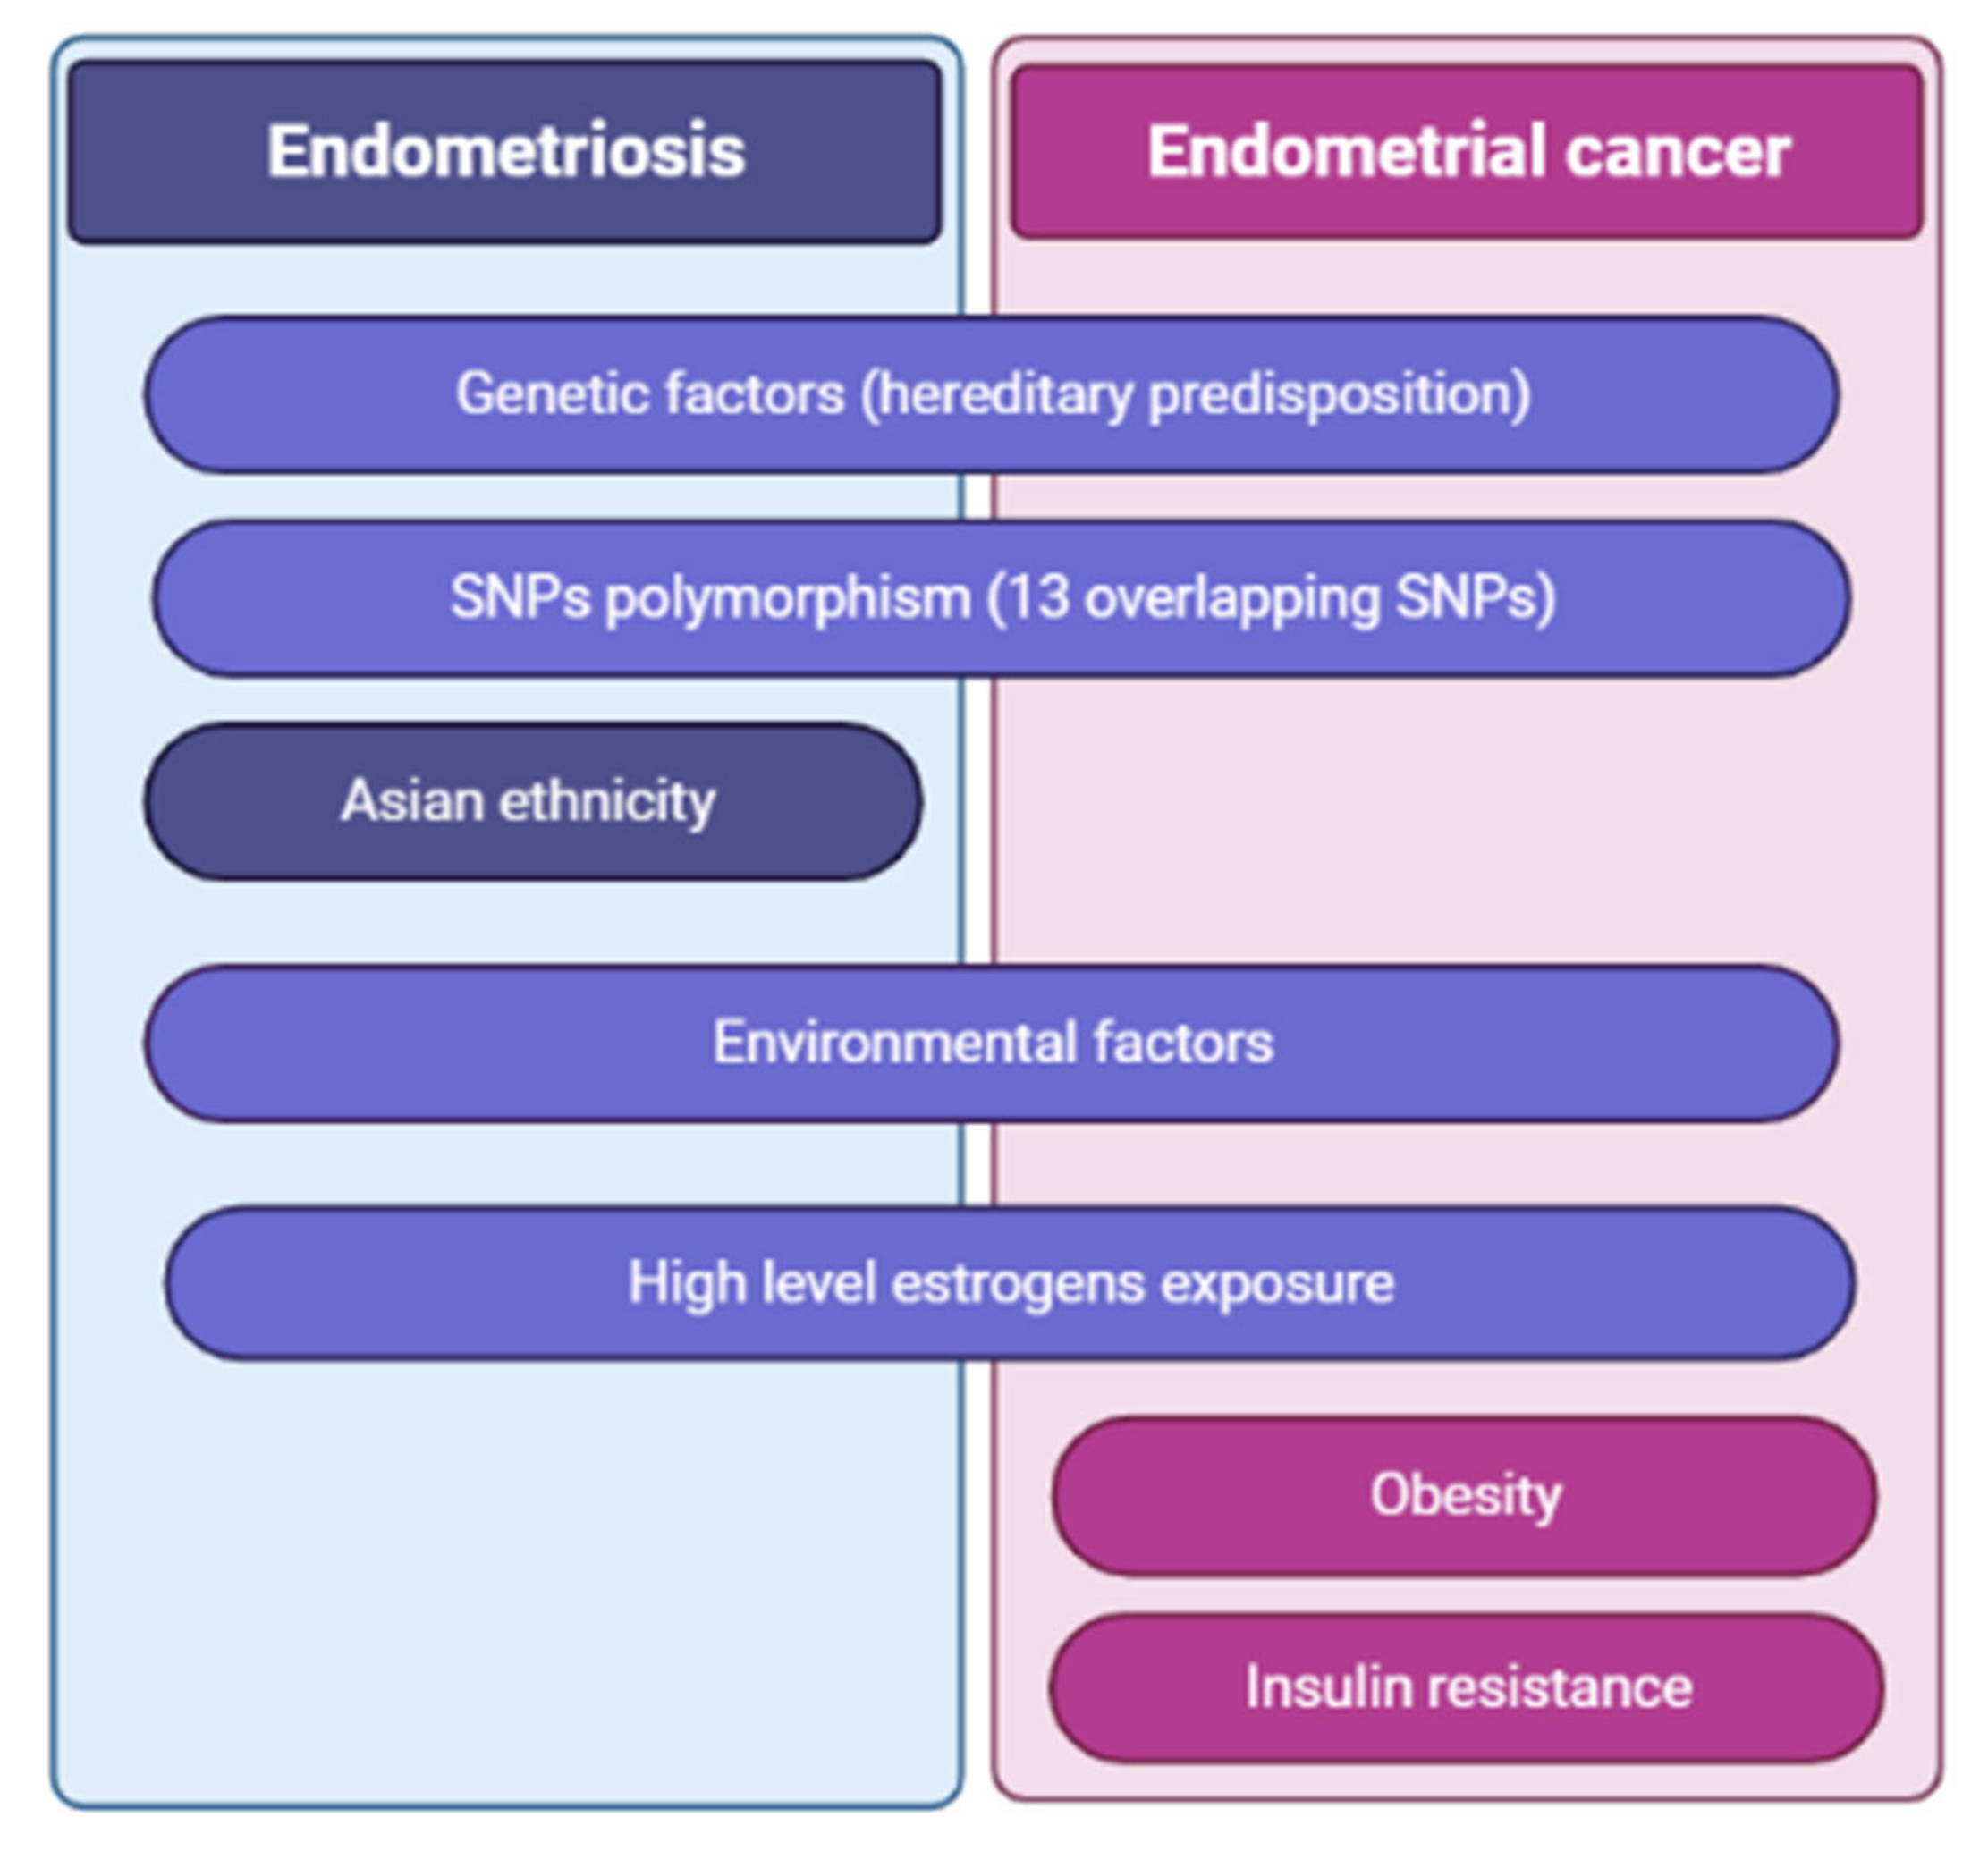 endometrial cancer thesis topics